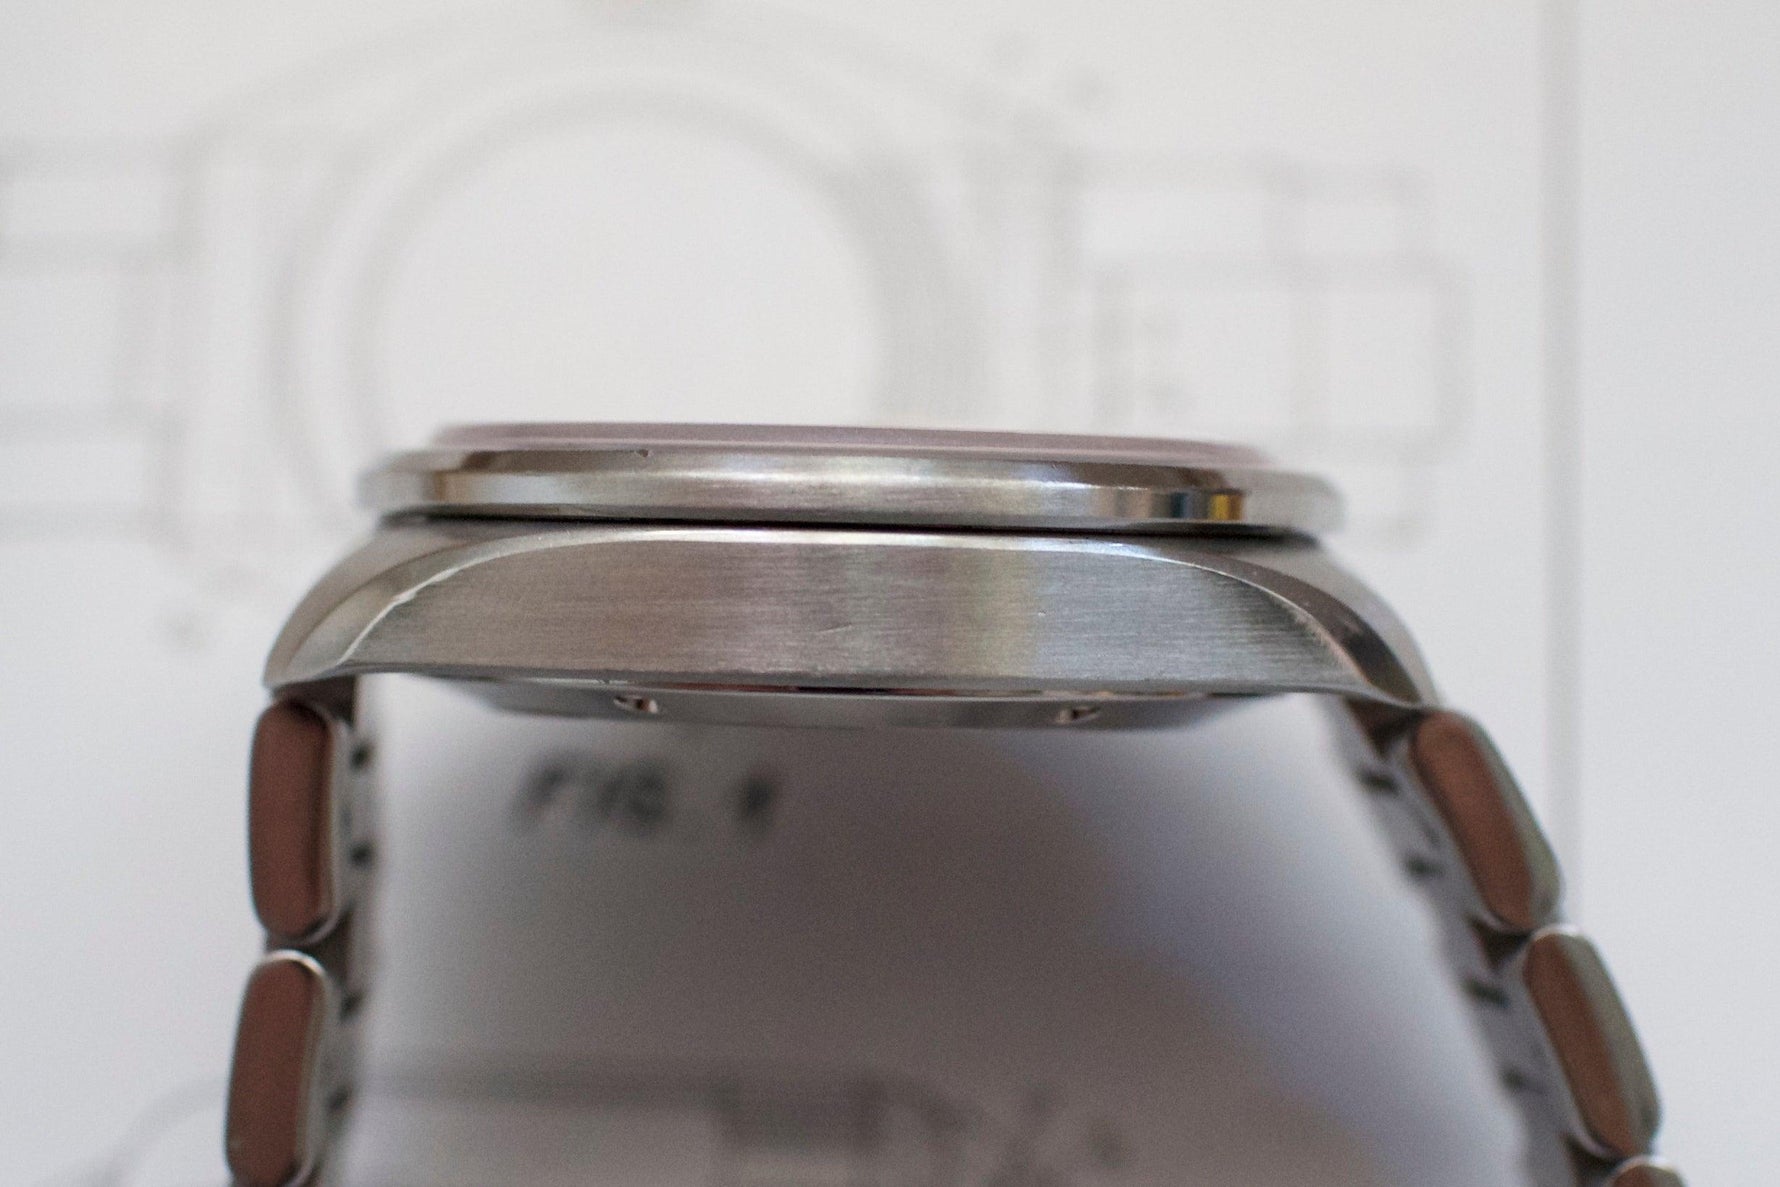 SOLDOUT: TAG Heuer Grand Carrera WAV5112.BA0901 - WearingTime Luxury Watches